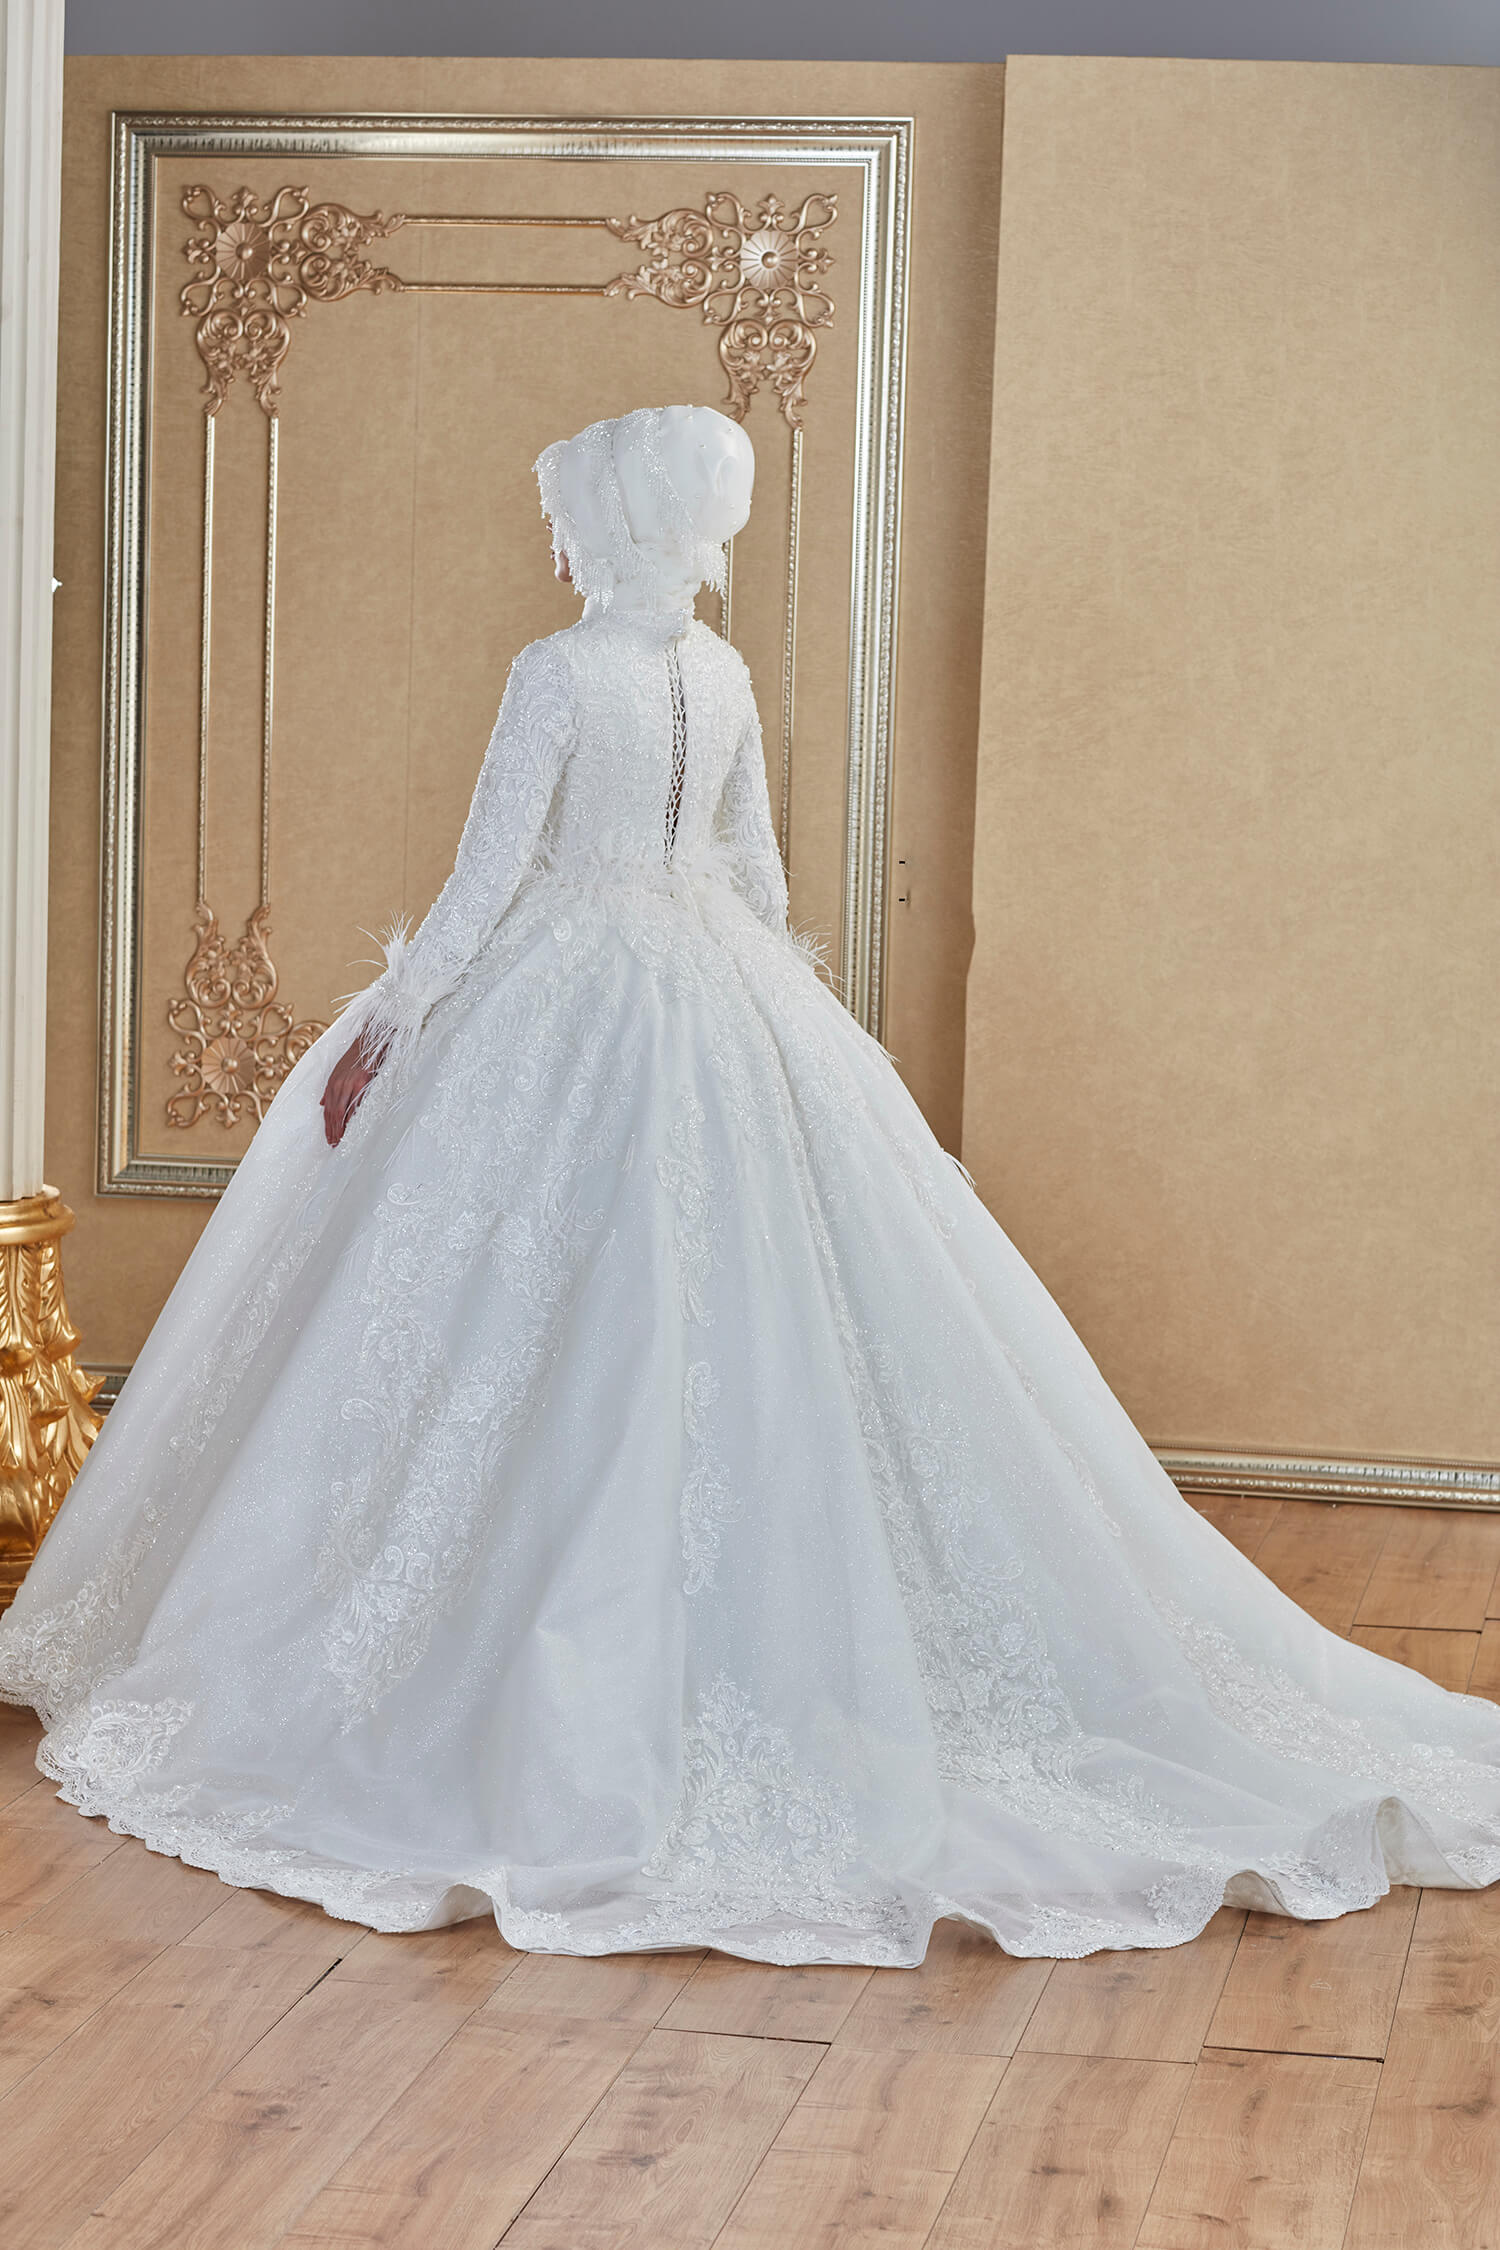 3D Crystal Stone Embroidered Hijab Princess Wedding Dress